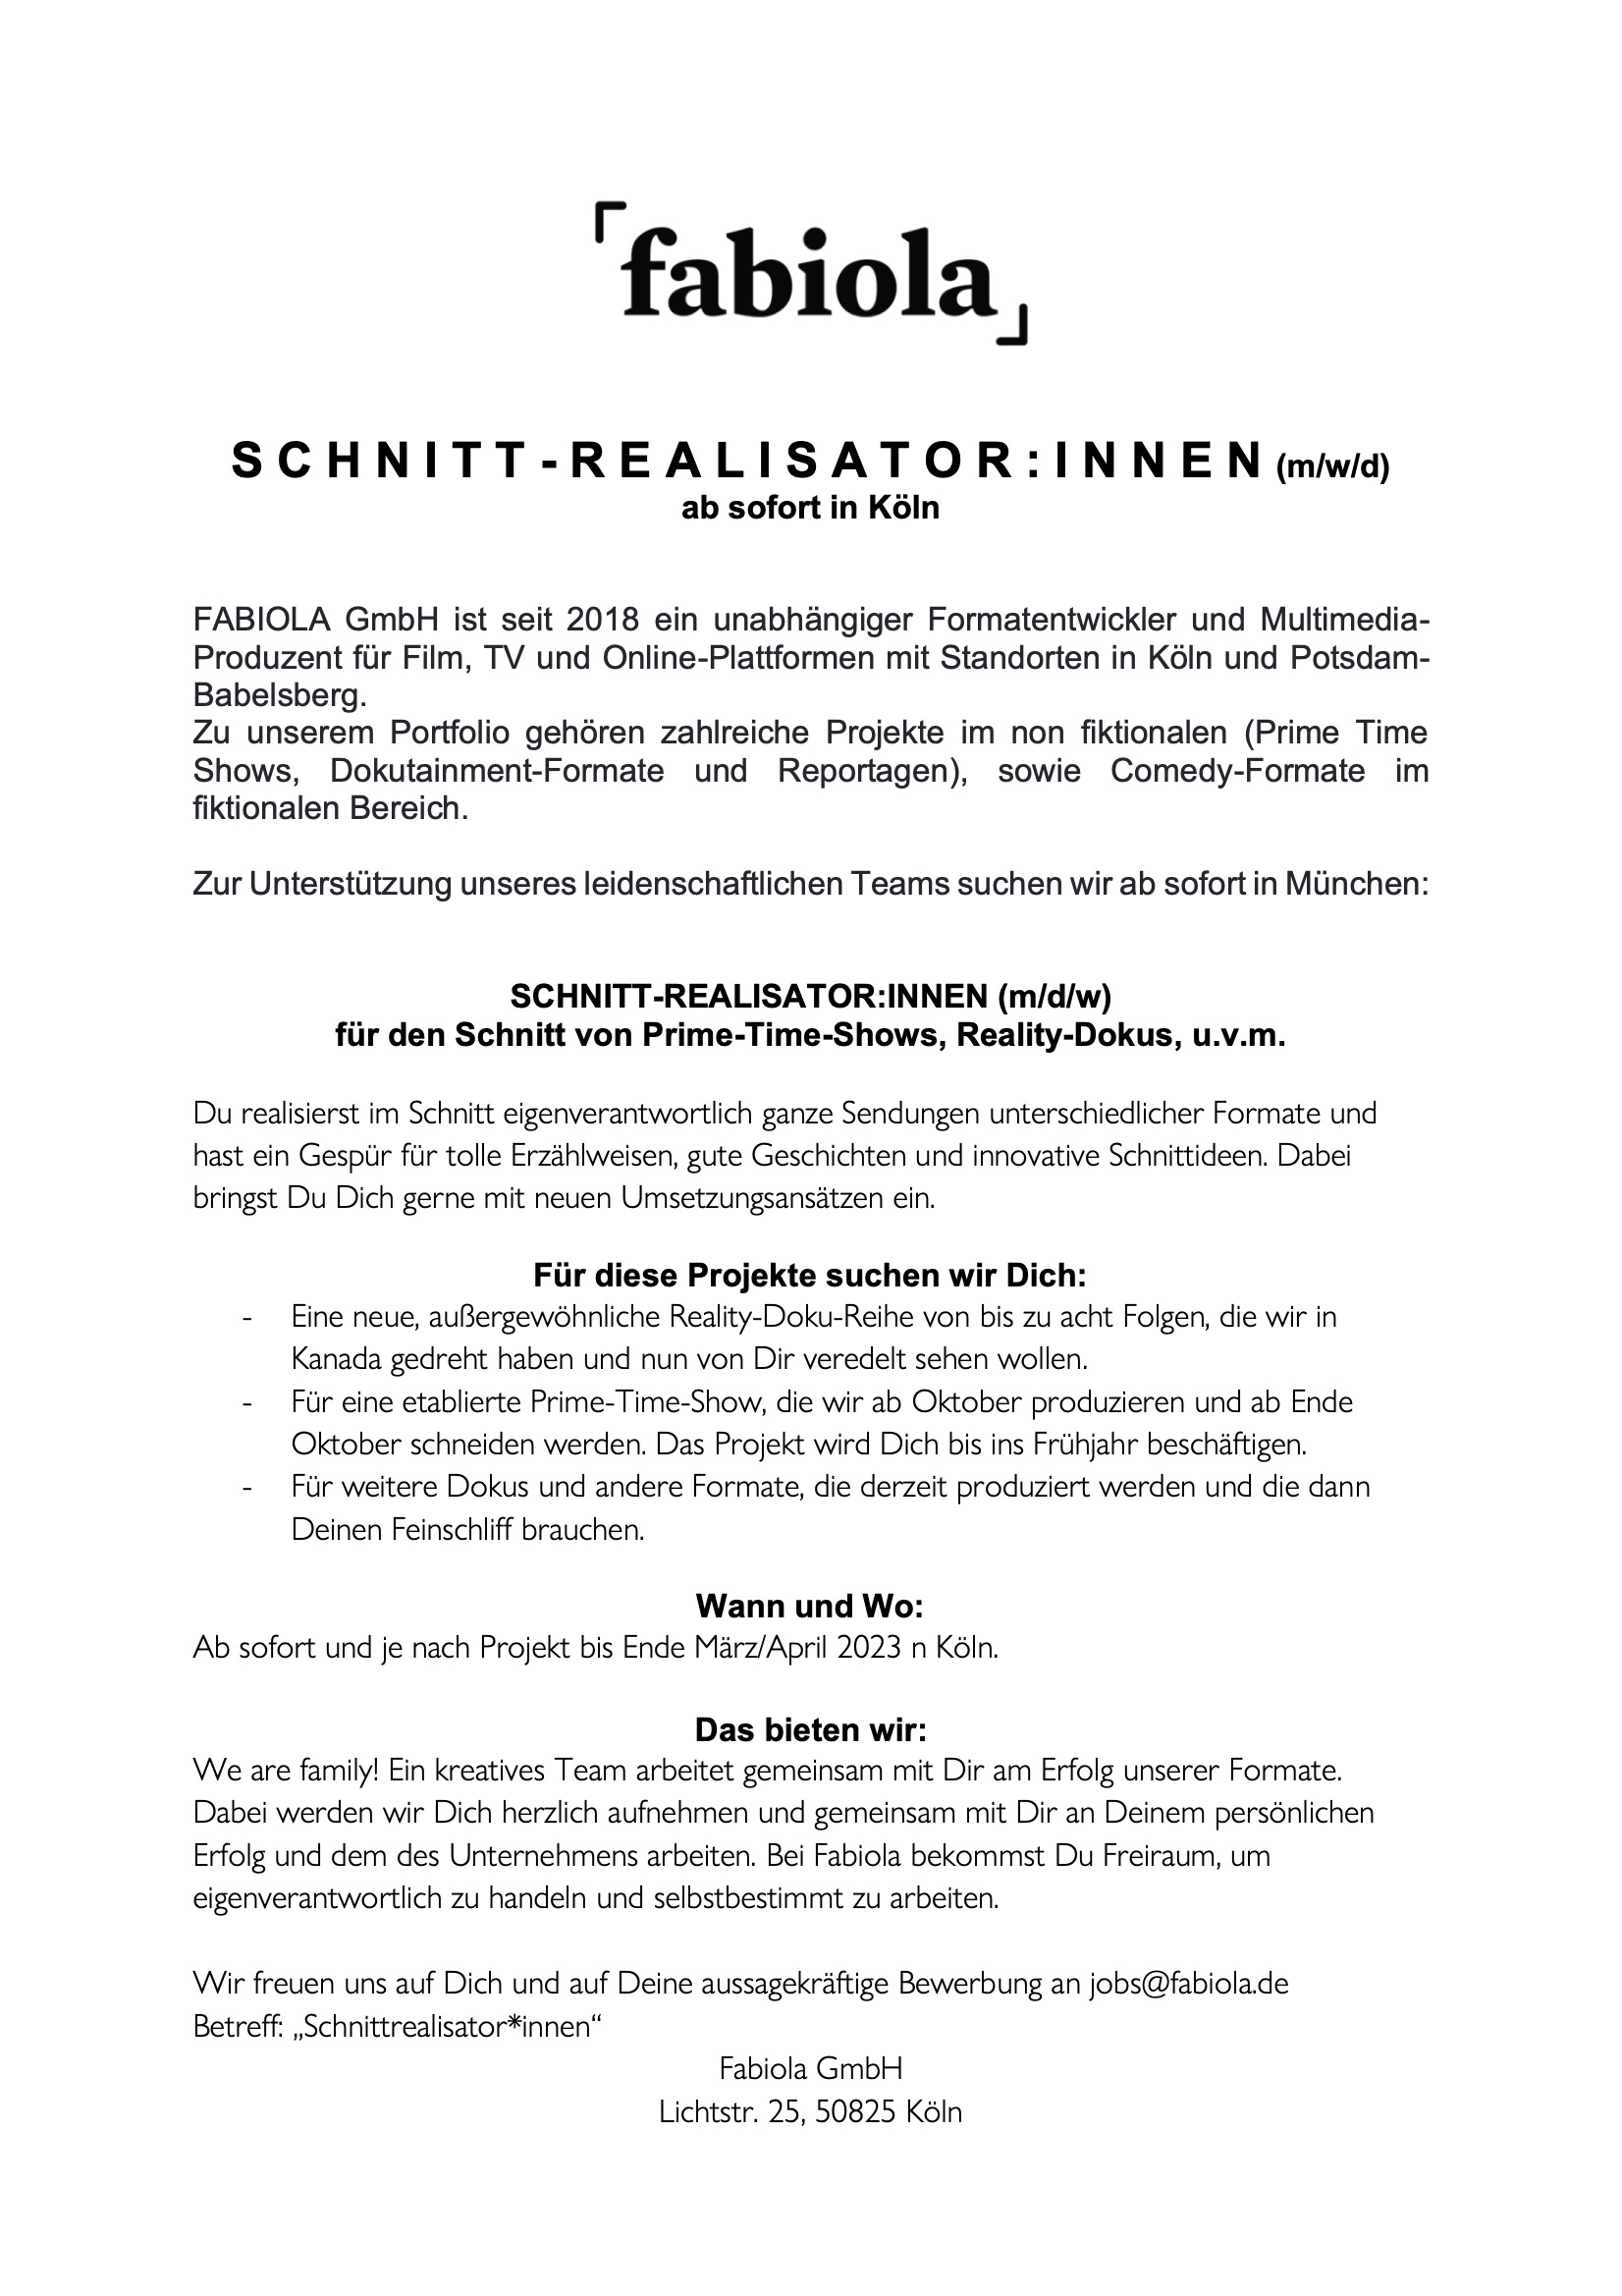 Schnitt-Realisator:in (m/w/d)